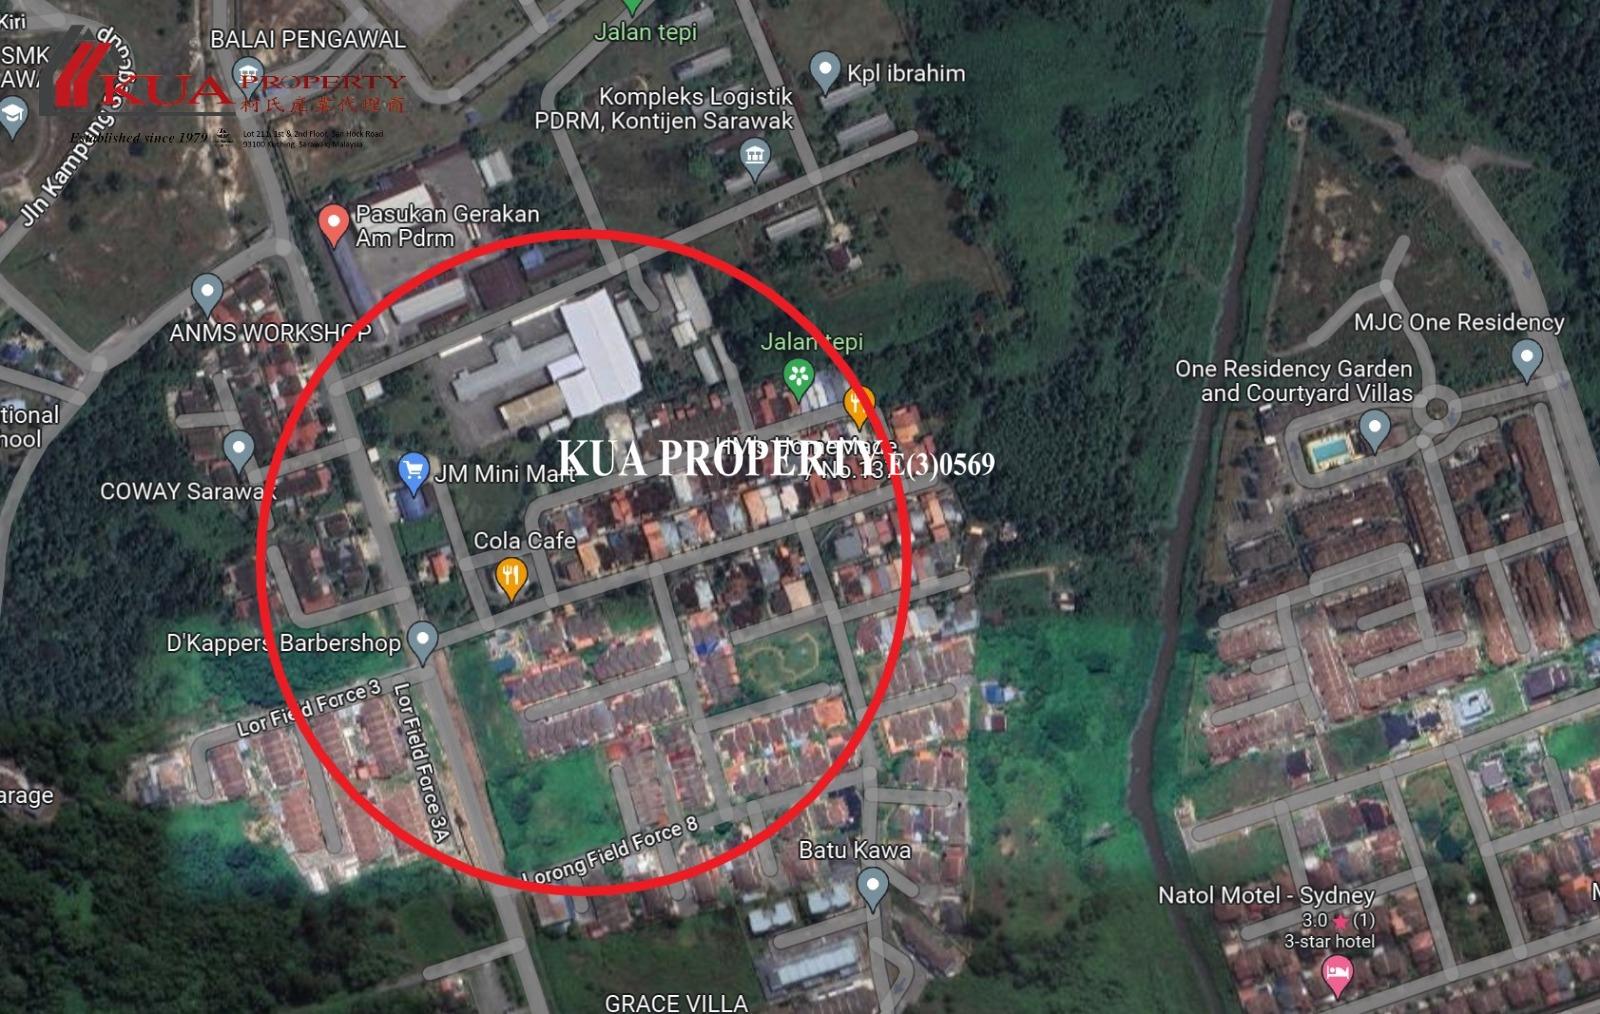 Detached Land For Sale! Located at Field Force, Batu Kawa